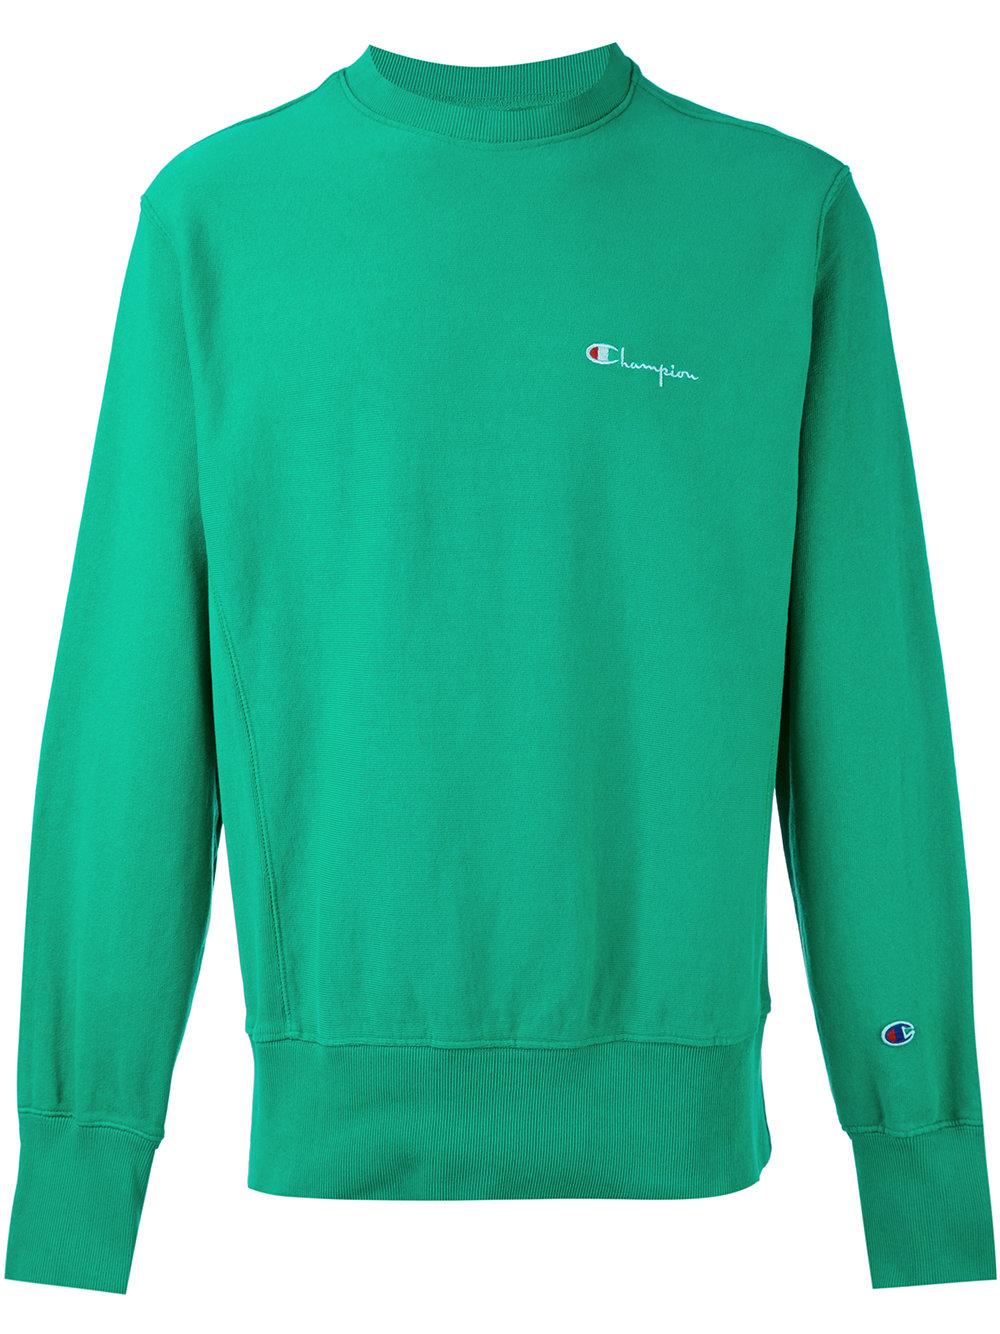 Champion Classic Sweatshirt in Green for Men - Lyst